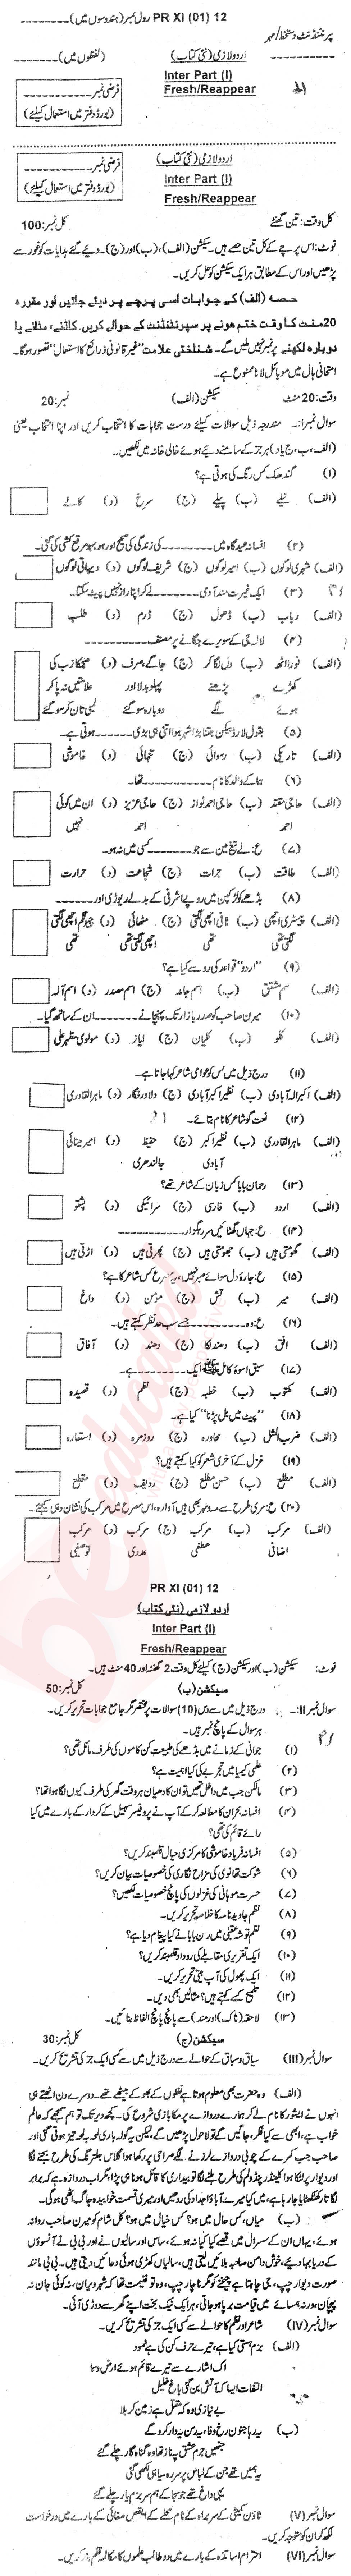 Urdu 11th class Past Paper Group 1 BISE Peshawar 2012